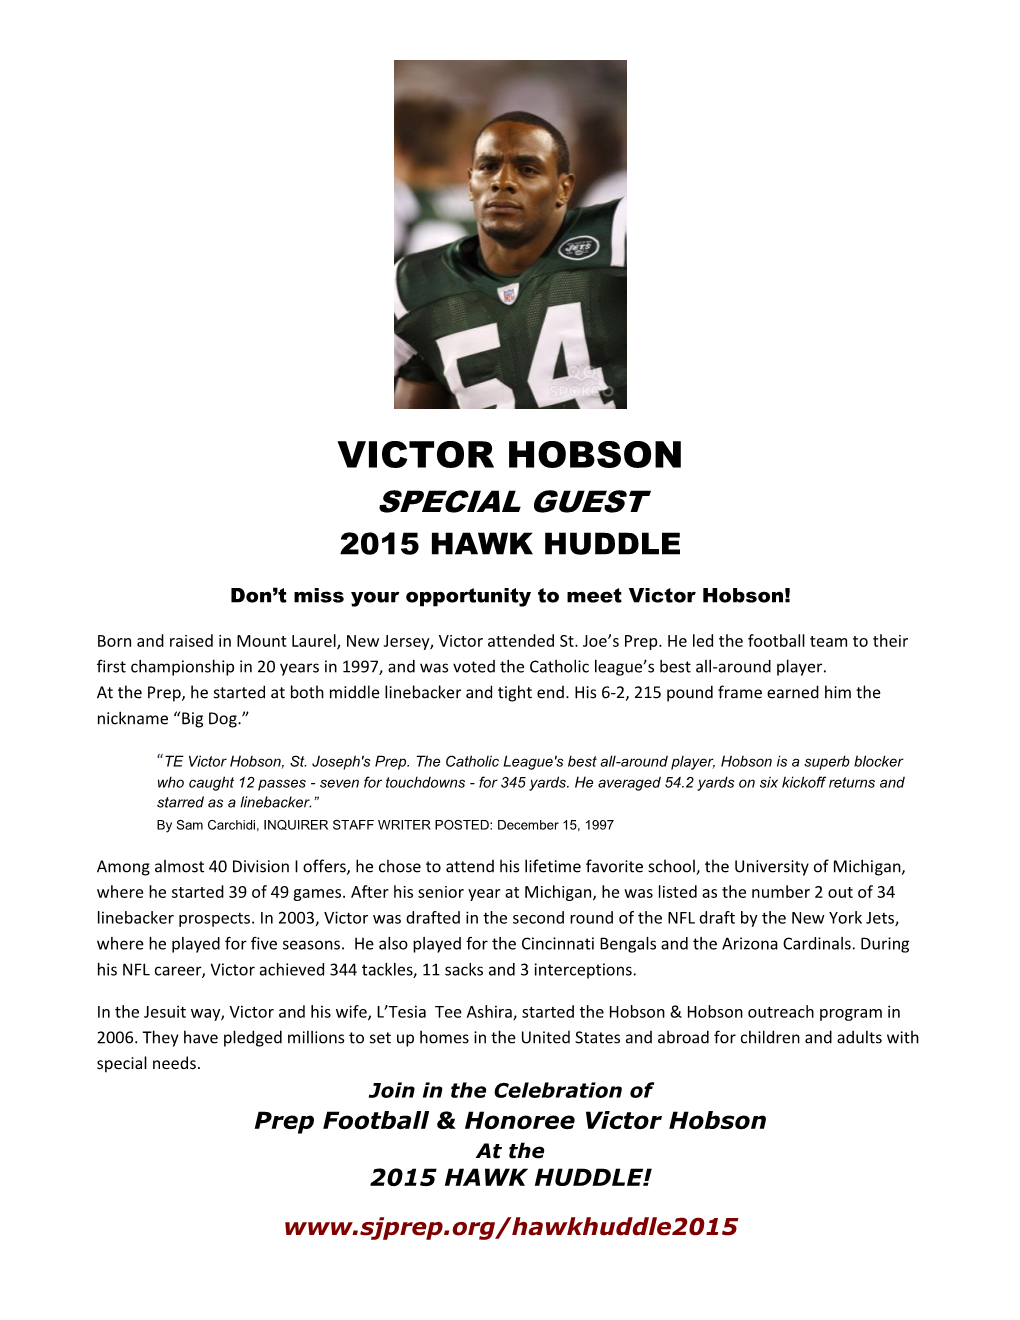 Victor Hobson Special Guest 2015 Hawk Huddle